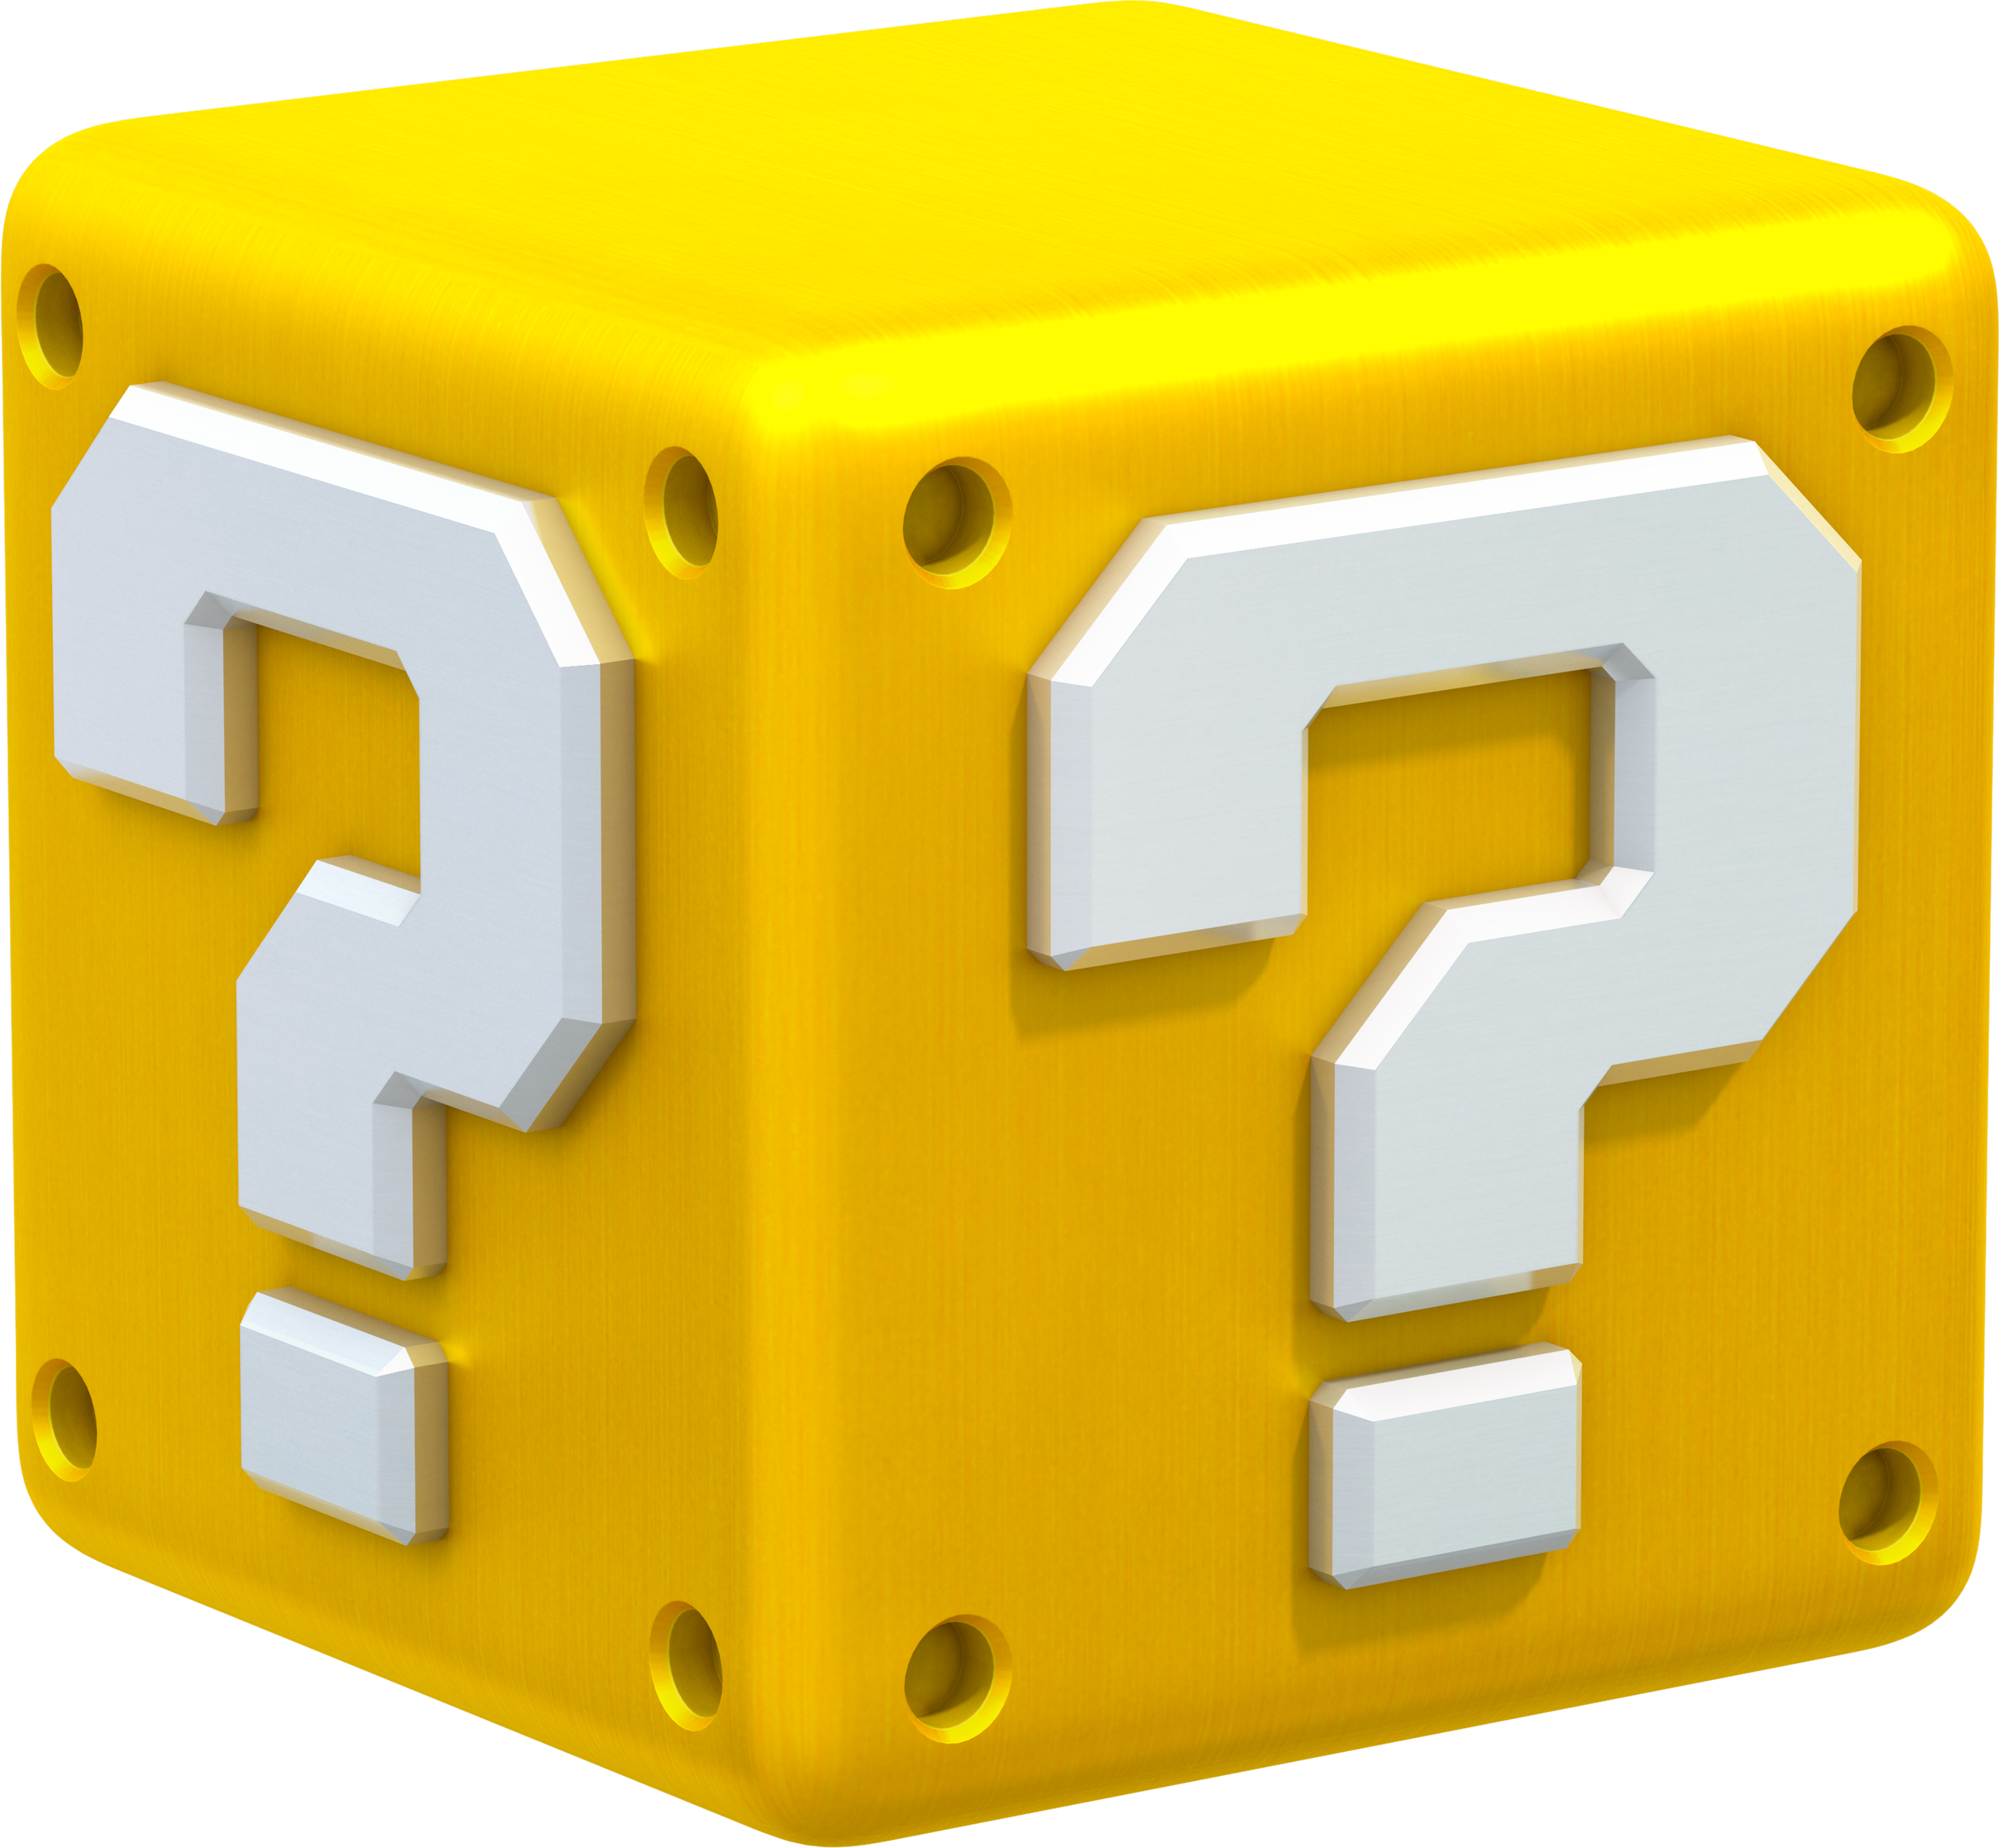 8 bit mario question block